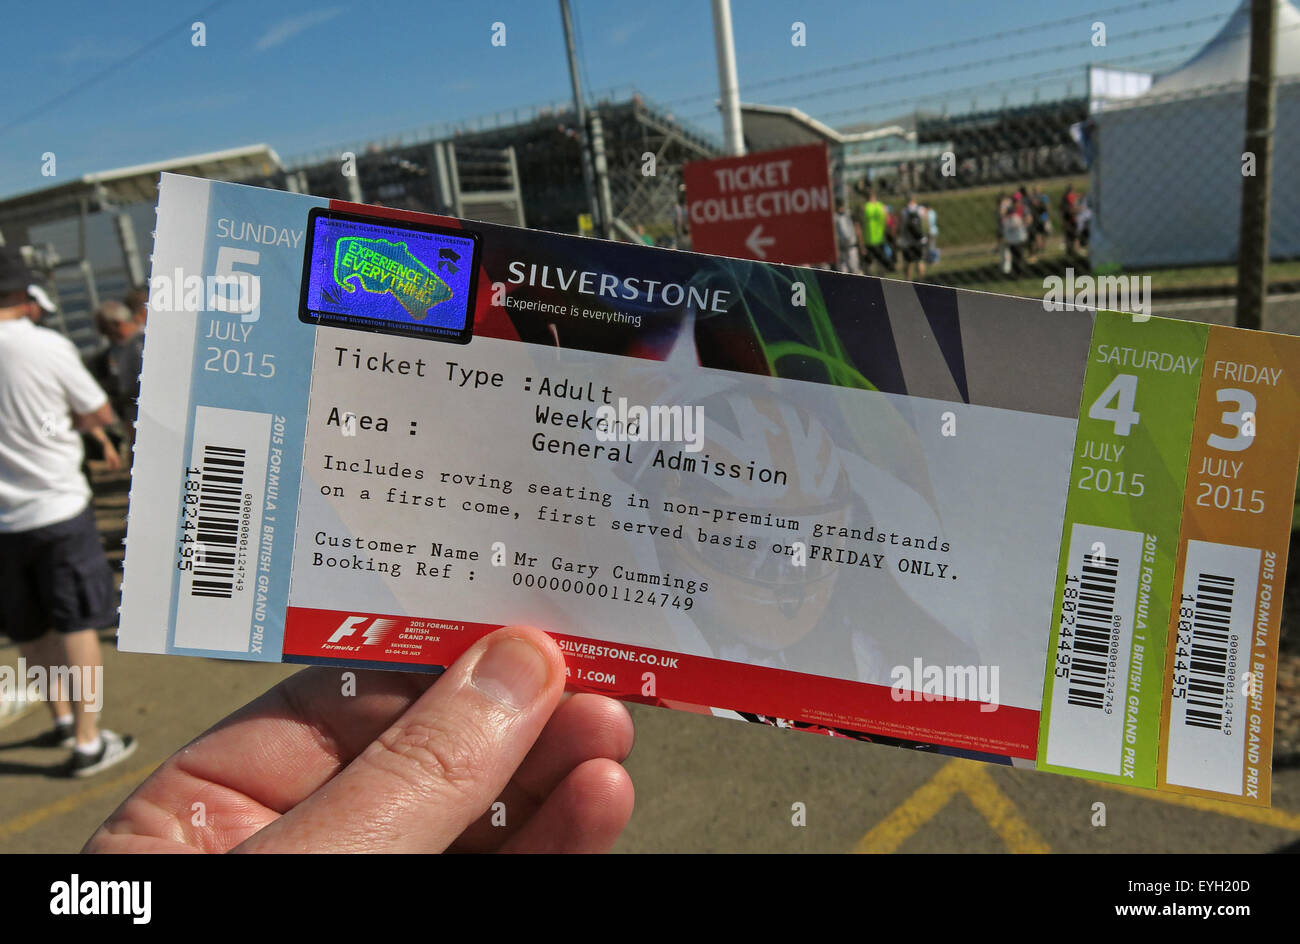 3day Ticket for Silverstone F1 British Grand Prix GP England 2015 Stock Photo